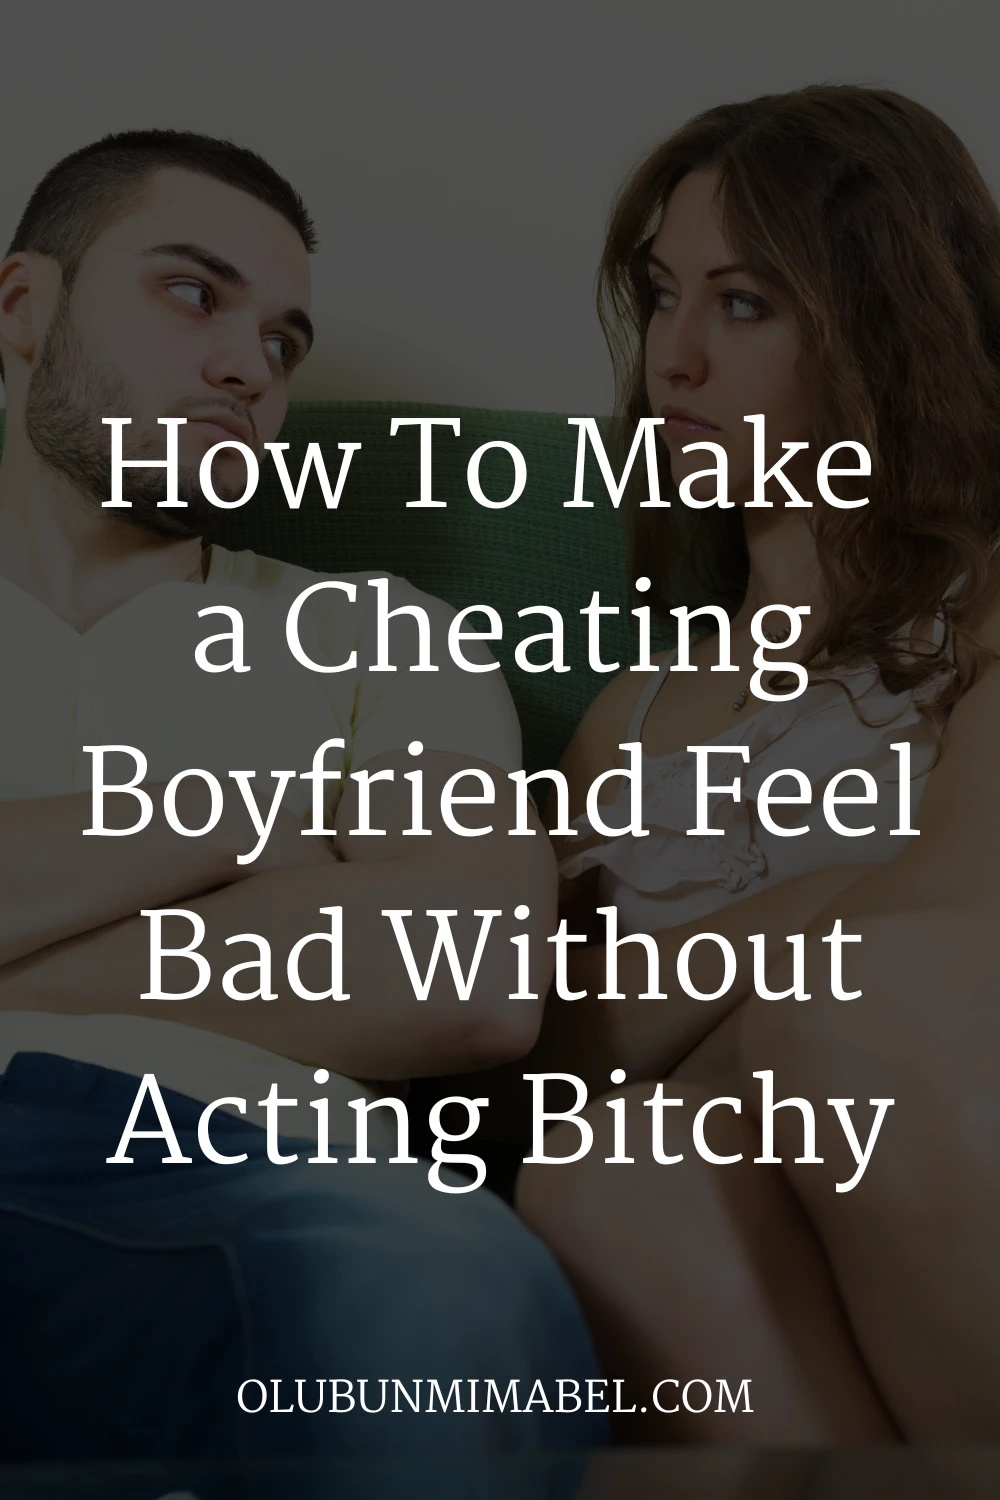 How To Make a Cheating Boyfriend Feel Bad